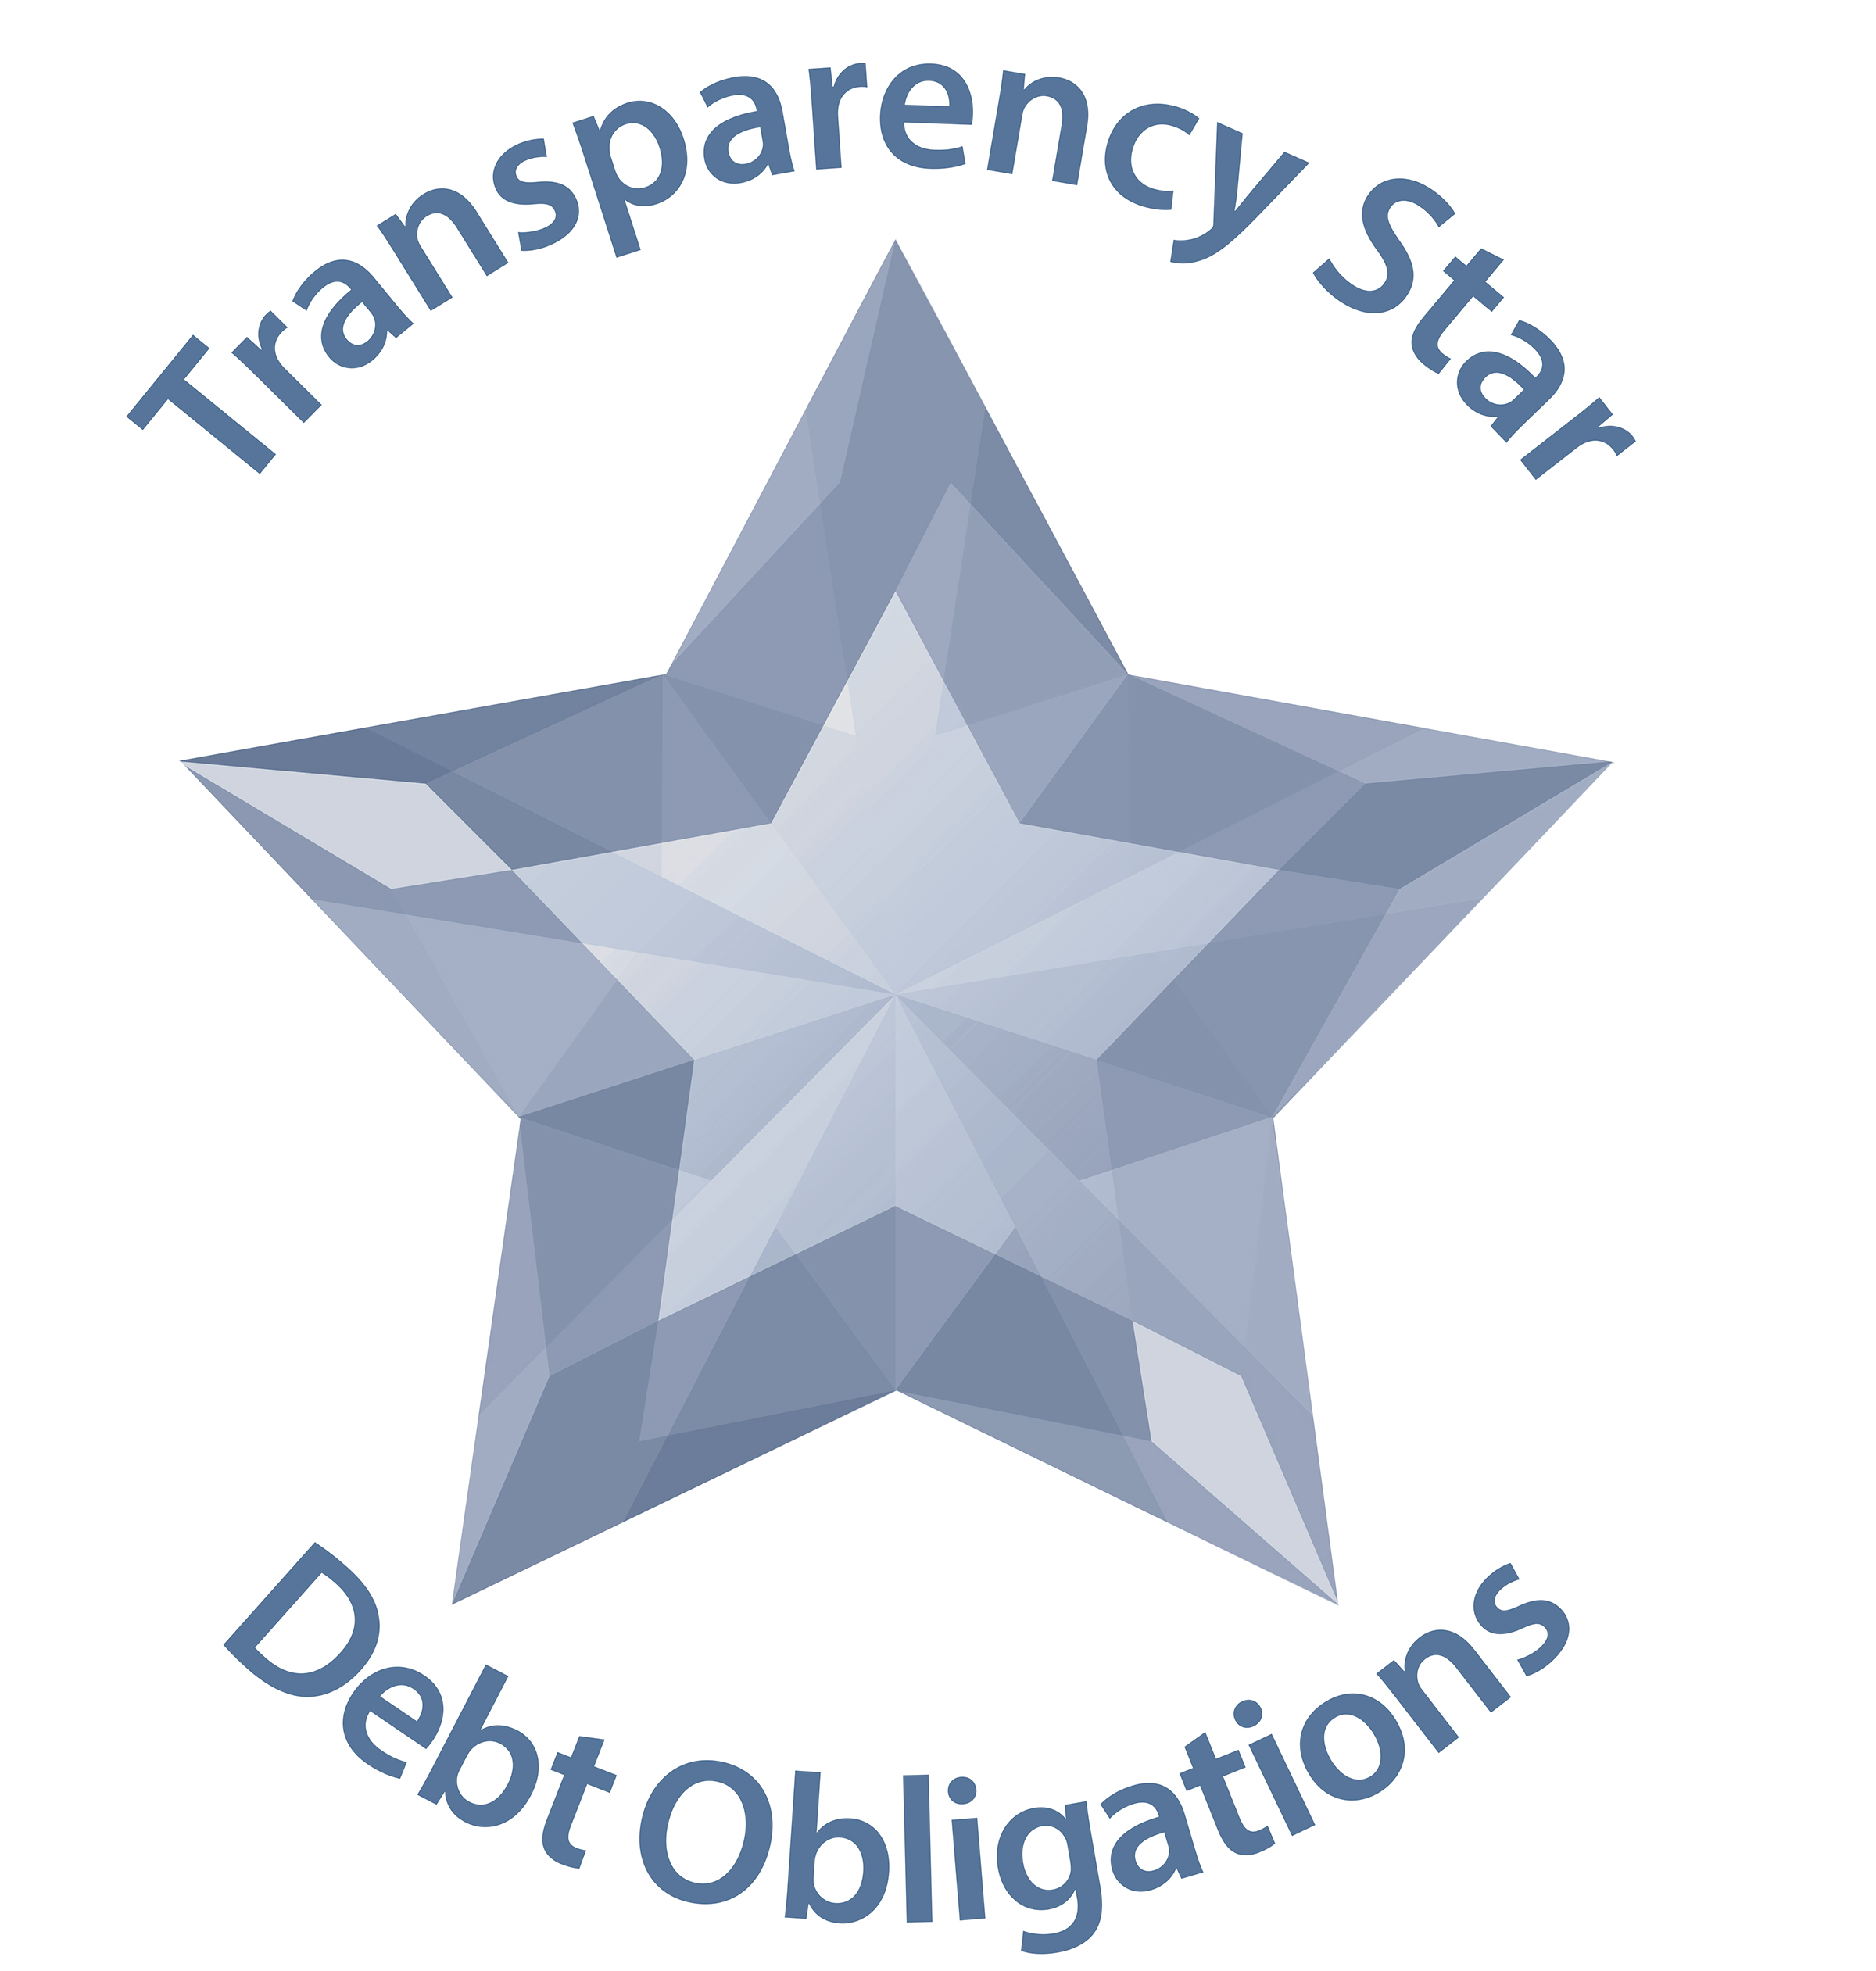 Debt obligations